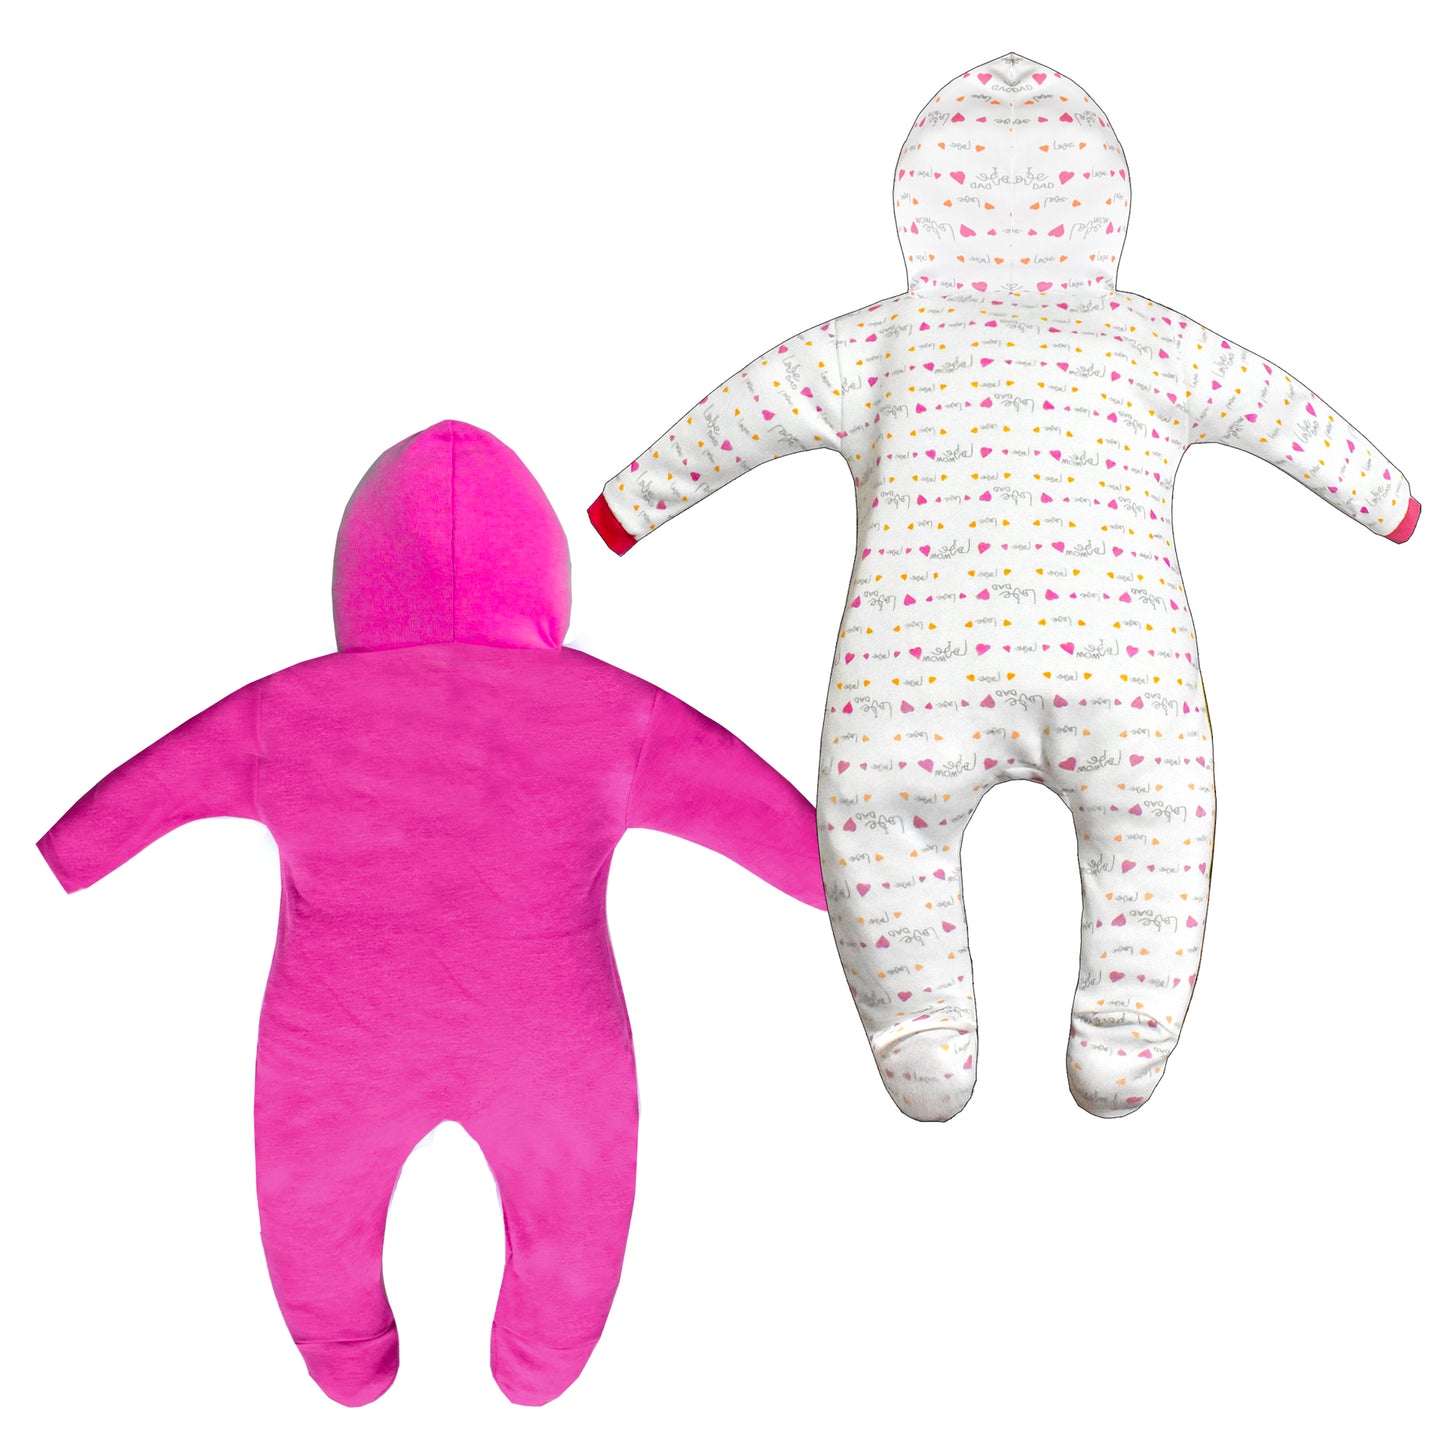 Zoey Dark Pink Hooded Full Sleeve Cotton Sleepsuit Rompers for boys & Girls (Pack of 2)